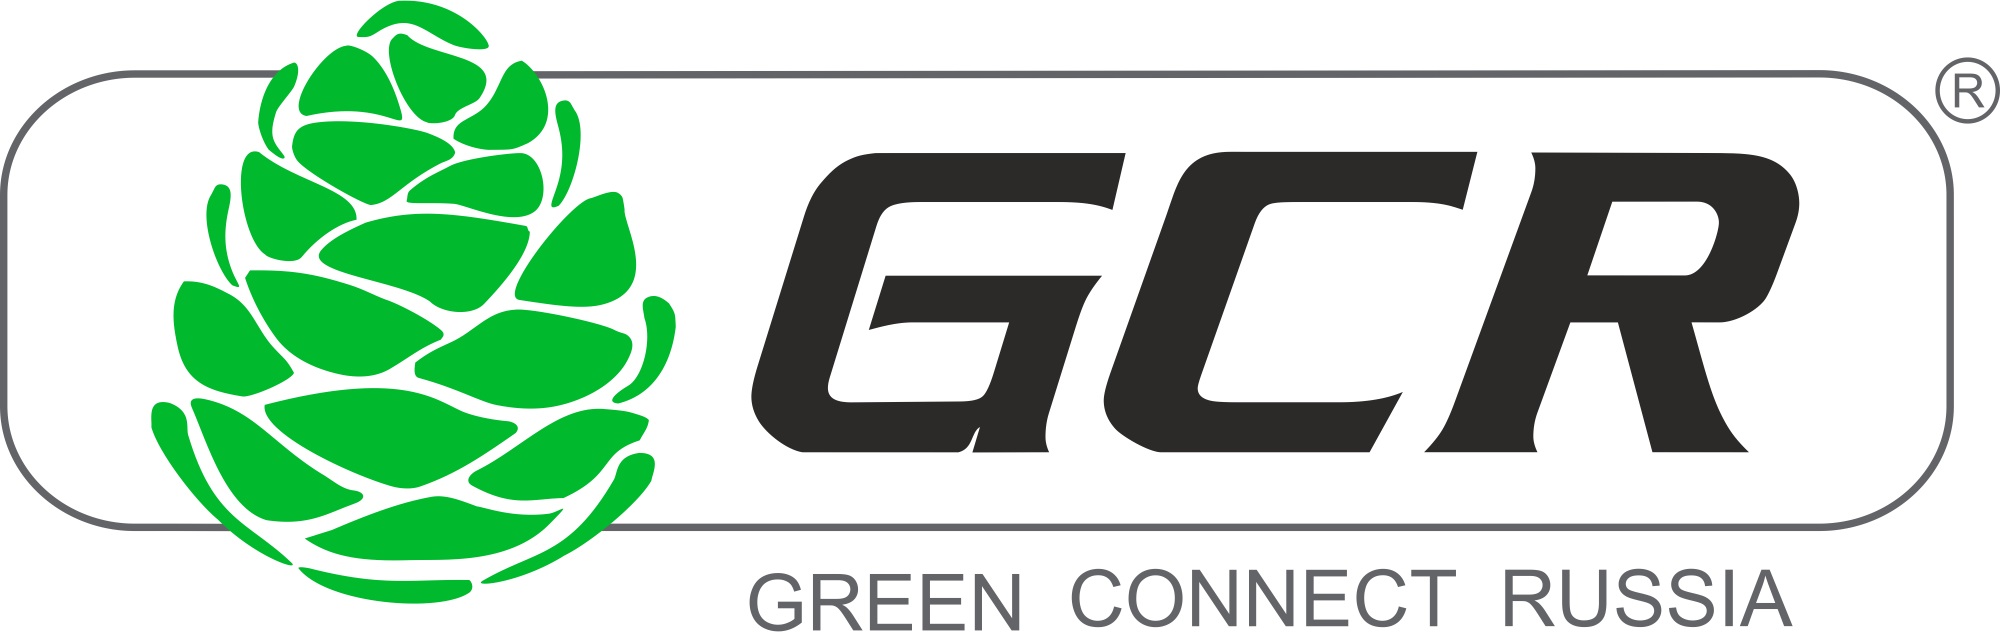 Бренд Greenconnect